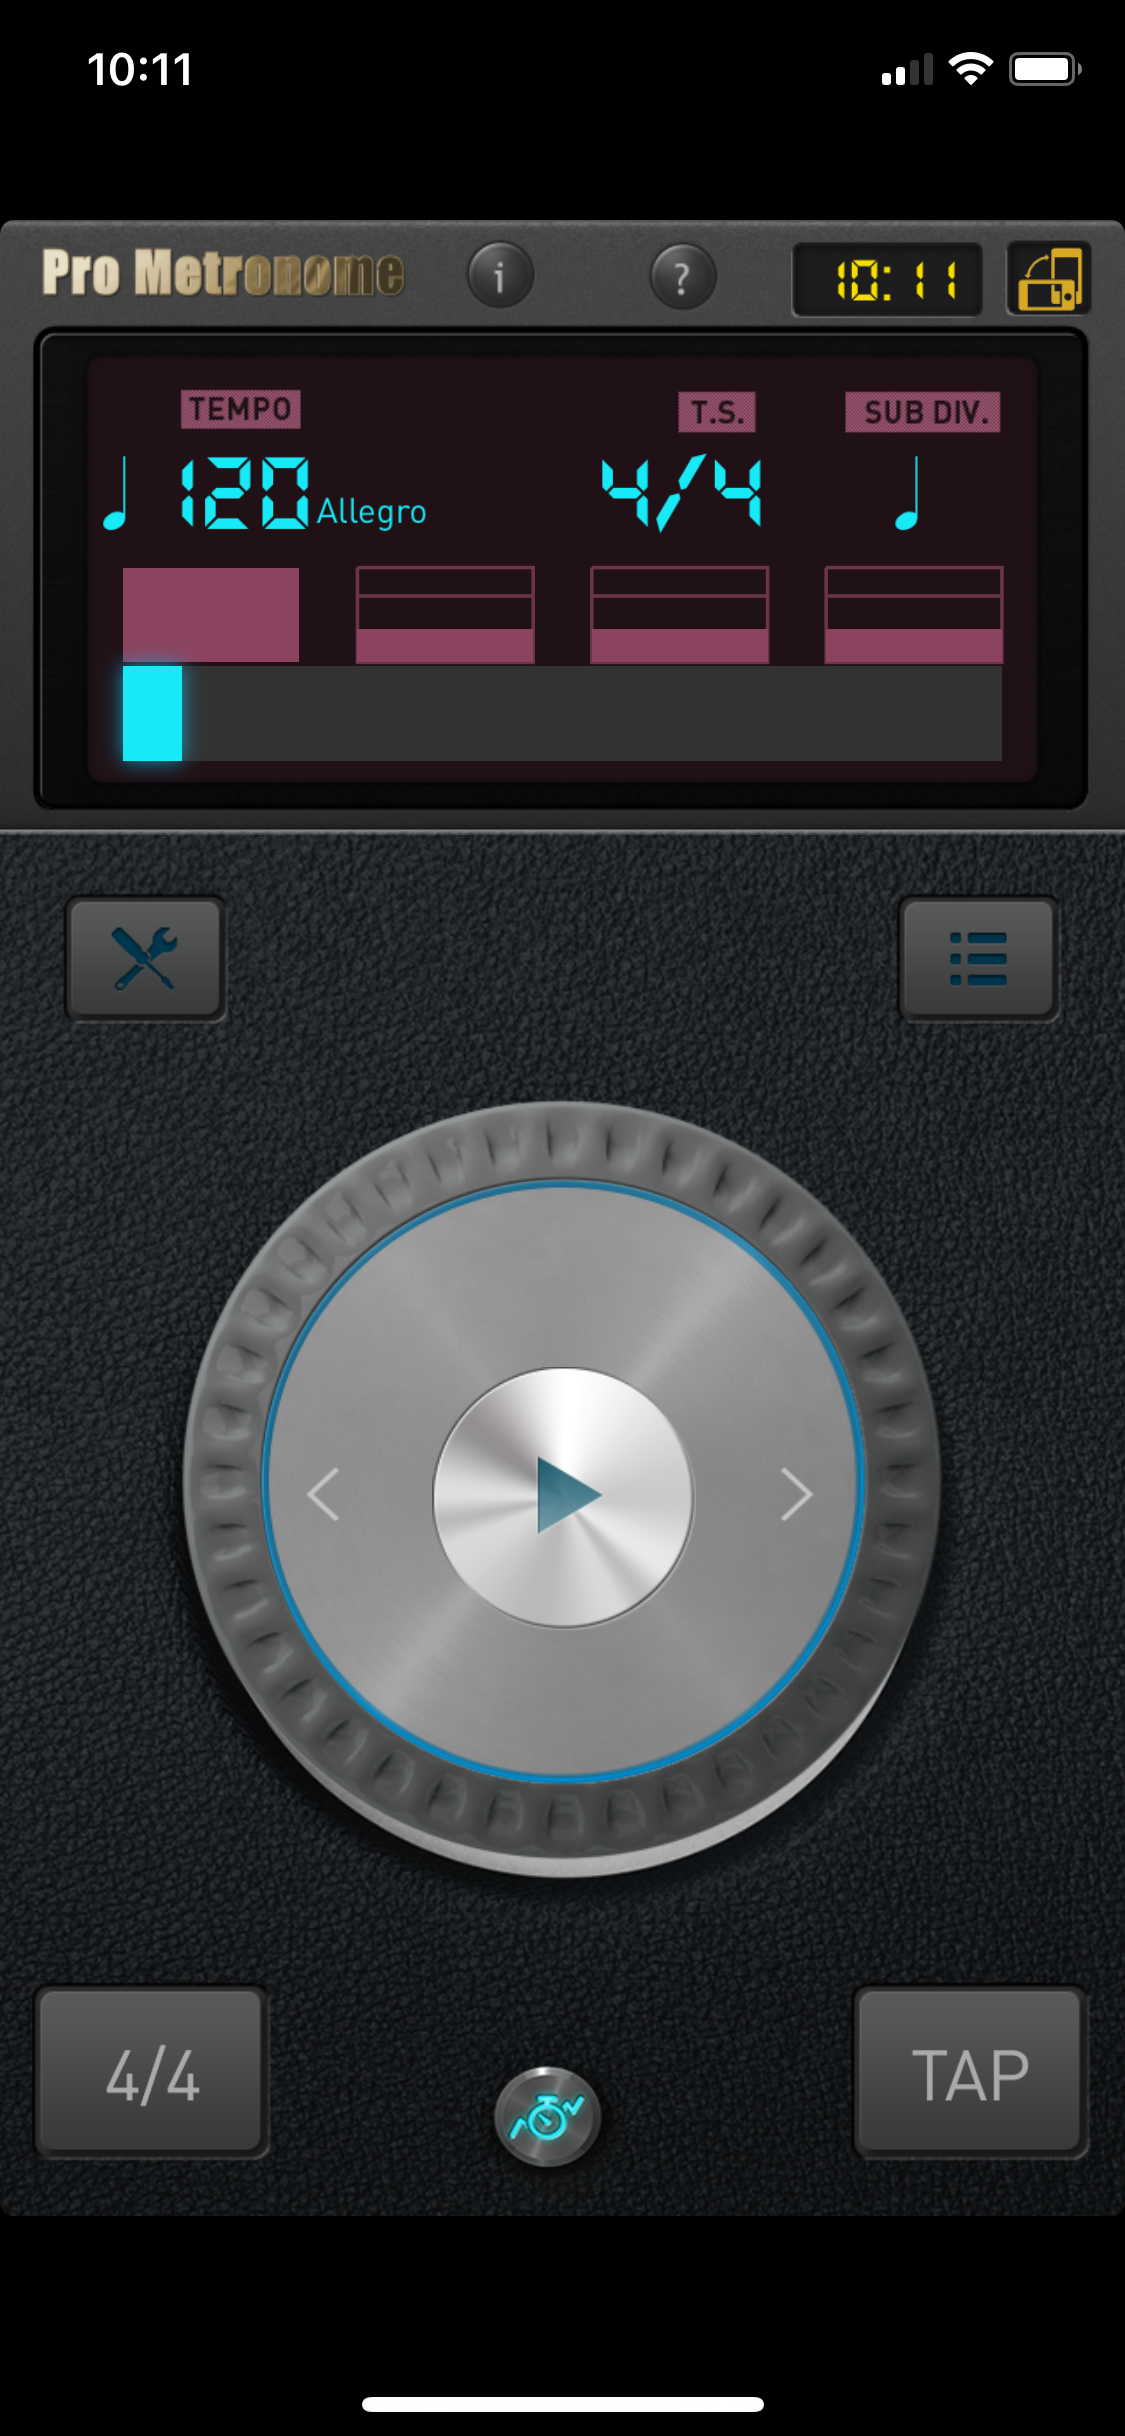 Pro Metronome App